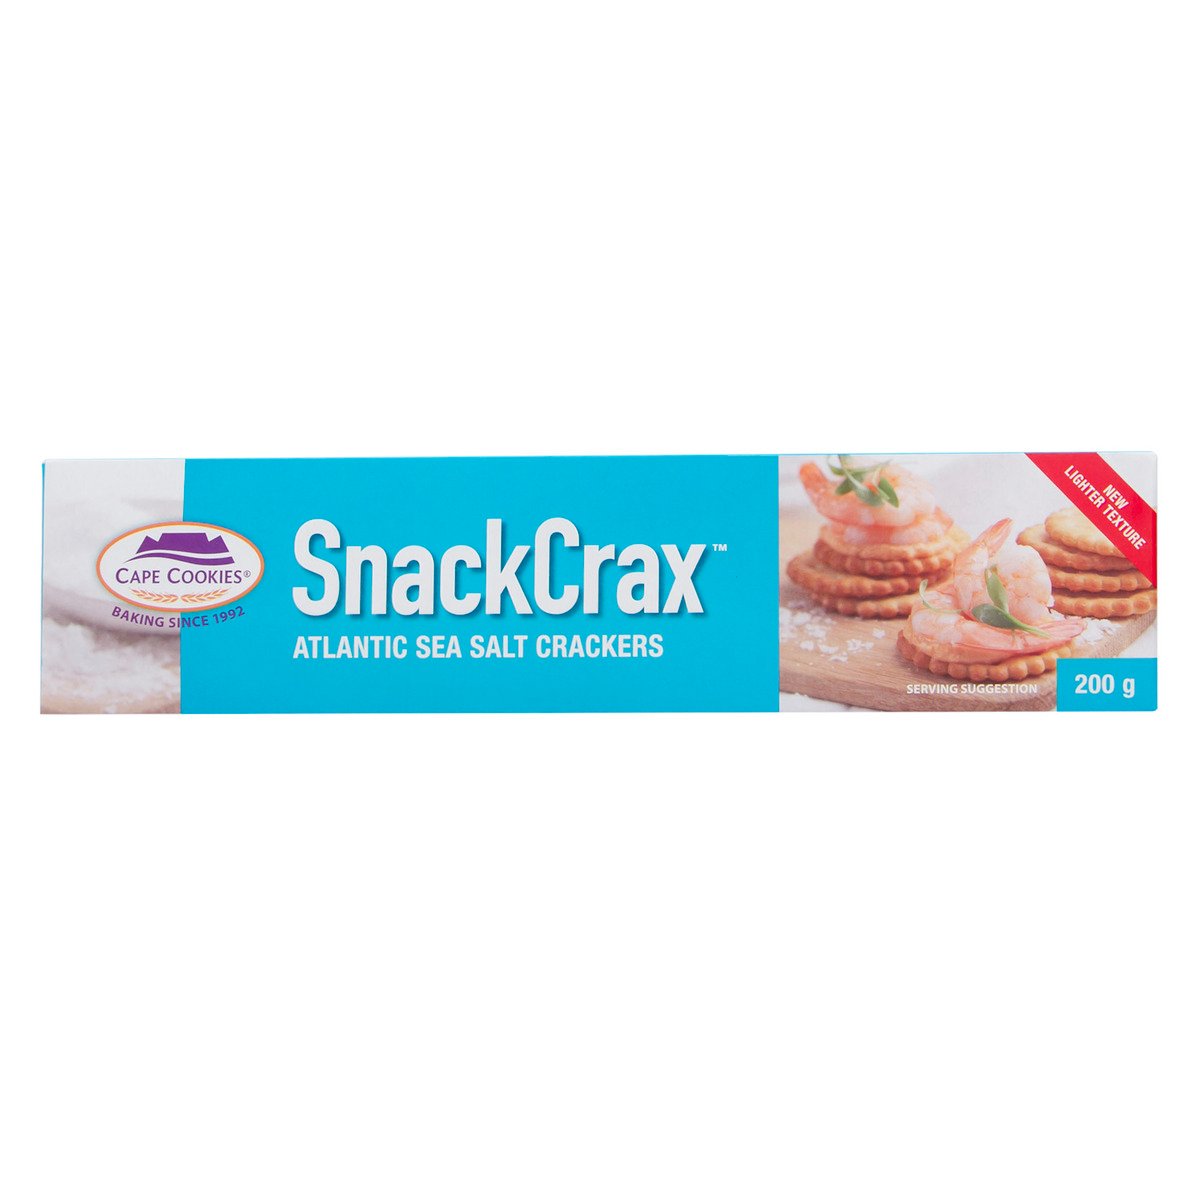 Cape Cookies Snack Crax Atlantic Sea Salt Crackers 200g